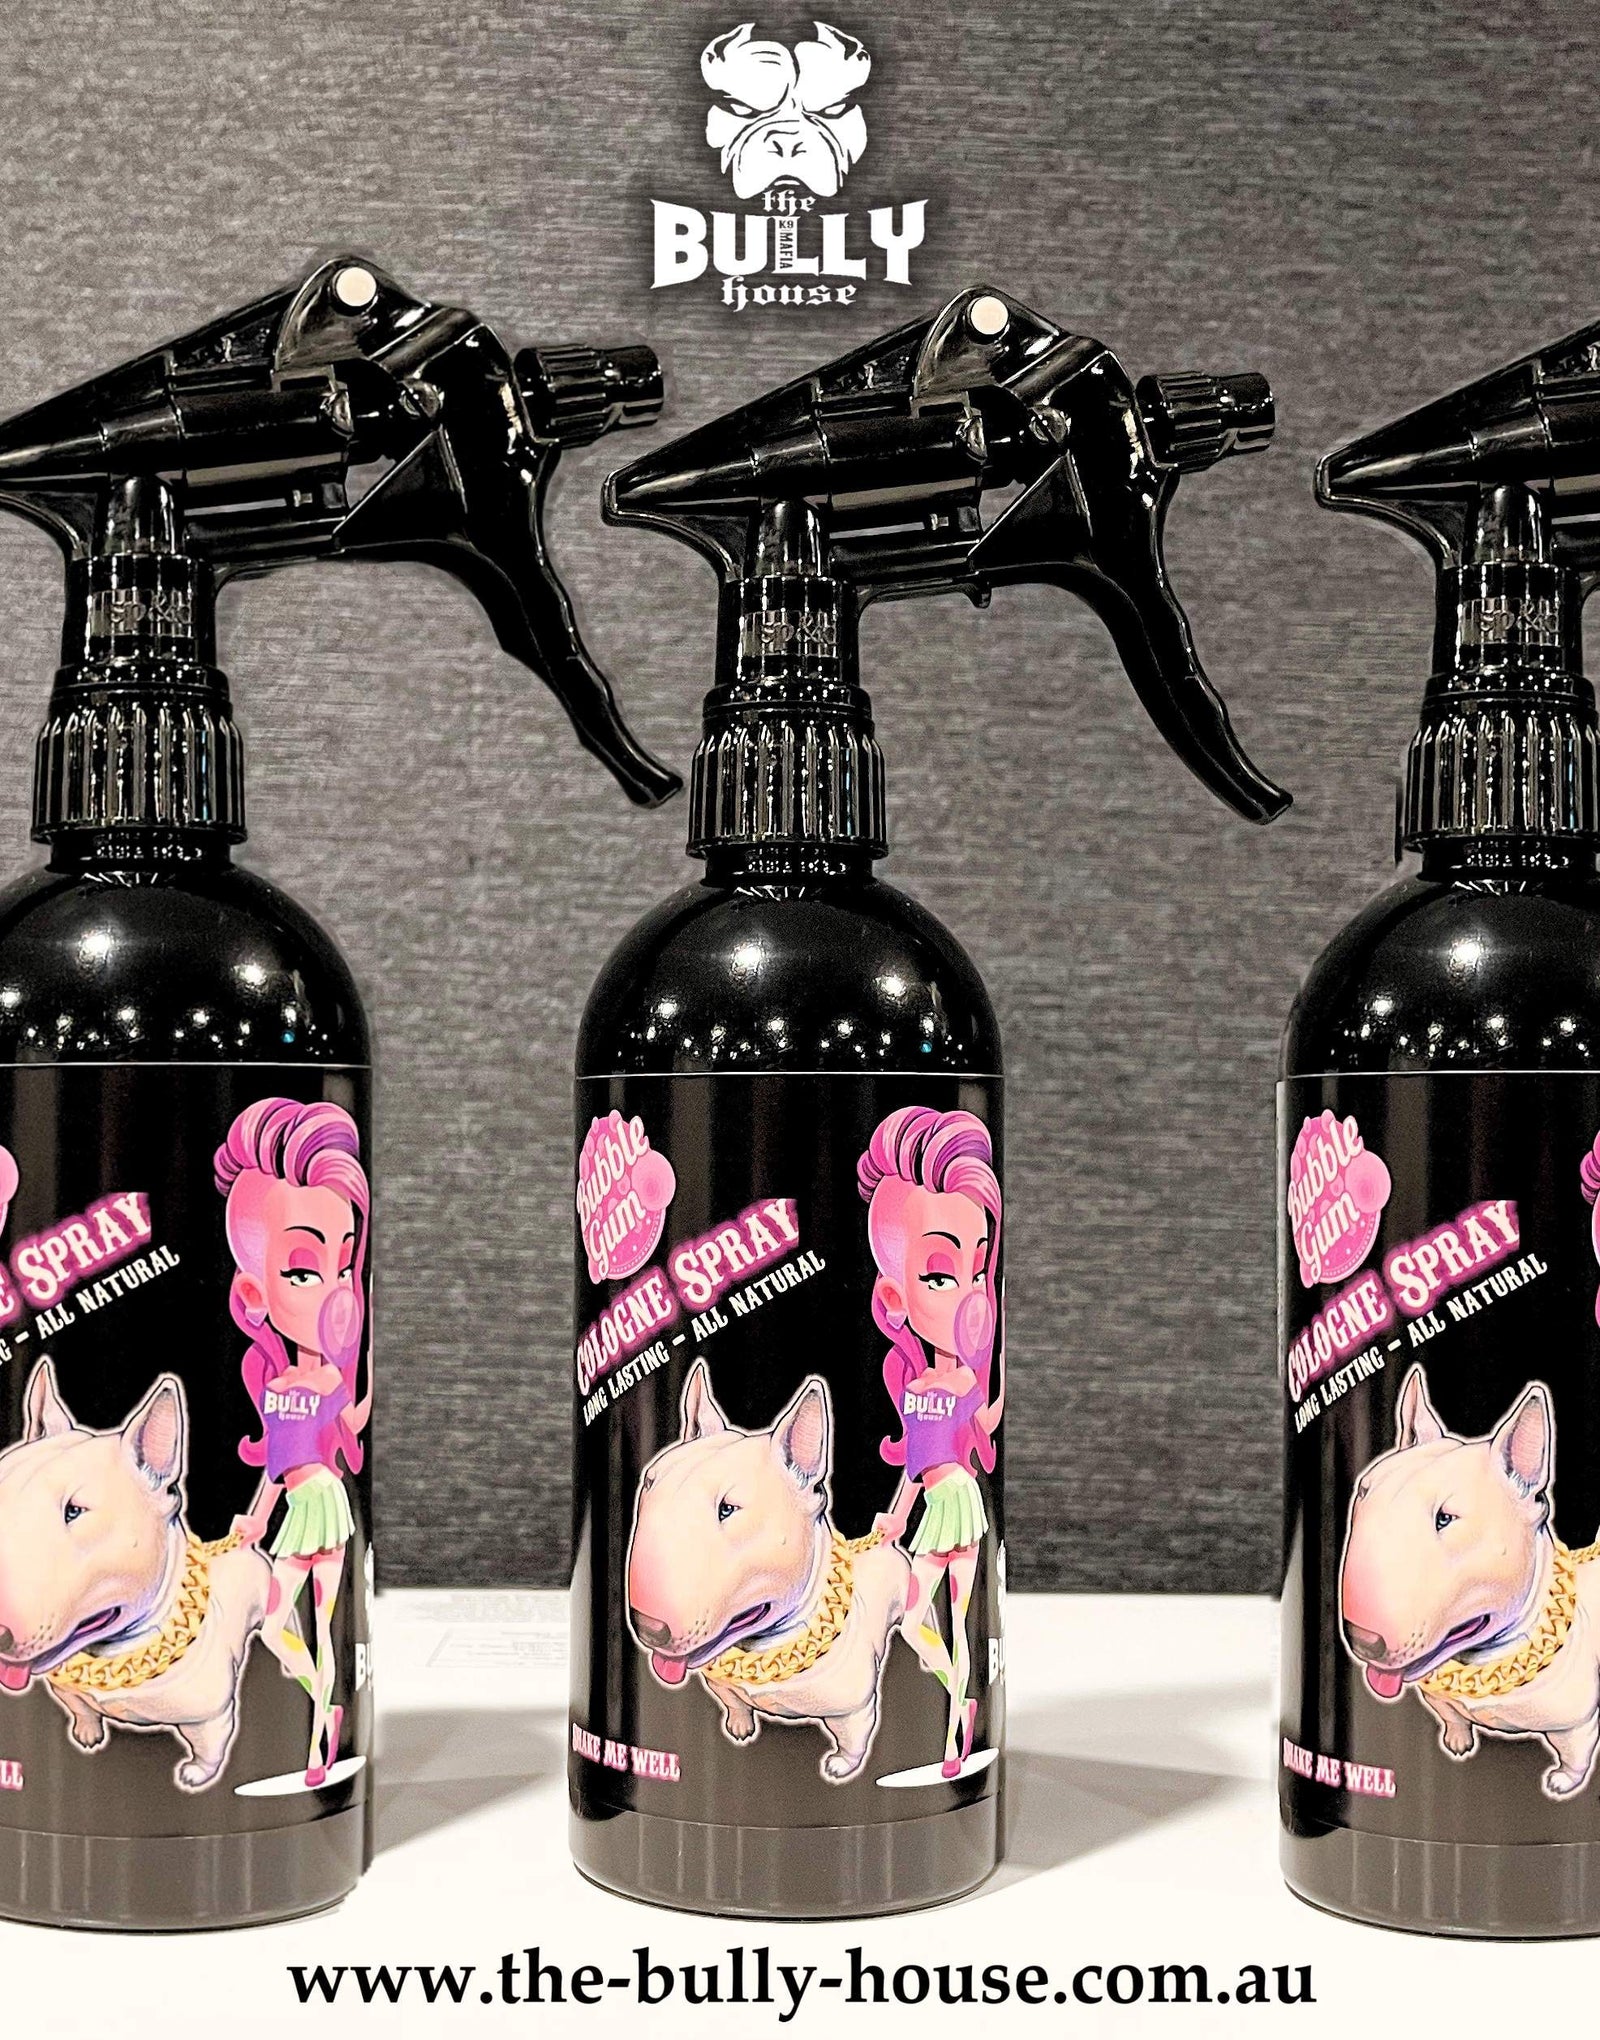 BUBBLEGUM -500 ml Dog/Puppy Cologne spray - OUR FAMOUS SIGNATURE FRAGRANCE